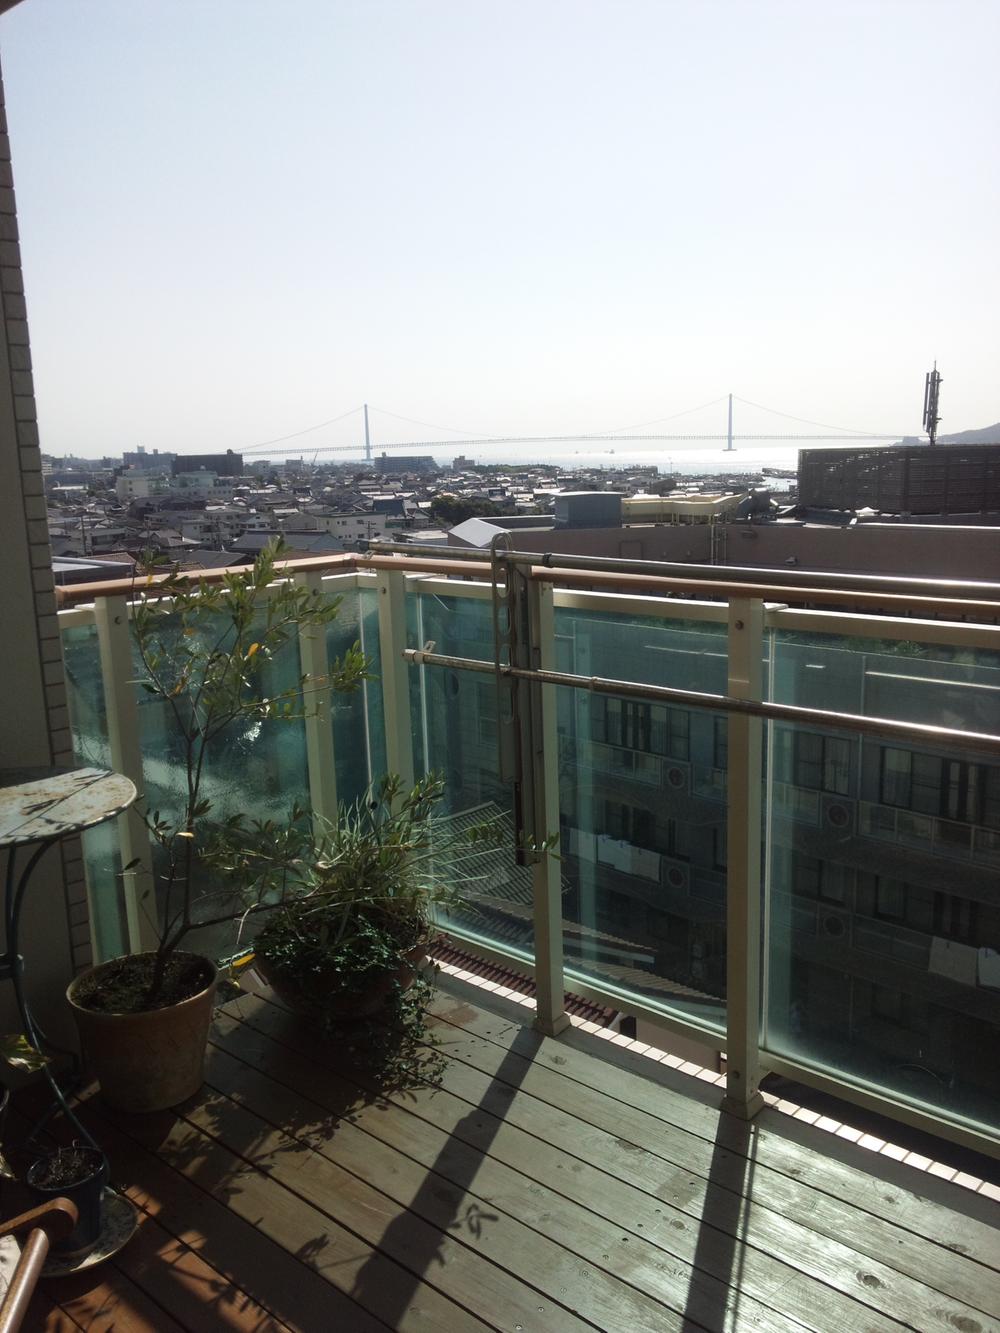 View photos from the dwelling unit. Akashi Kaikyo Bridge views from balcony